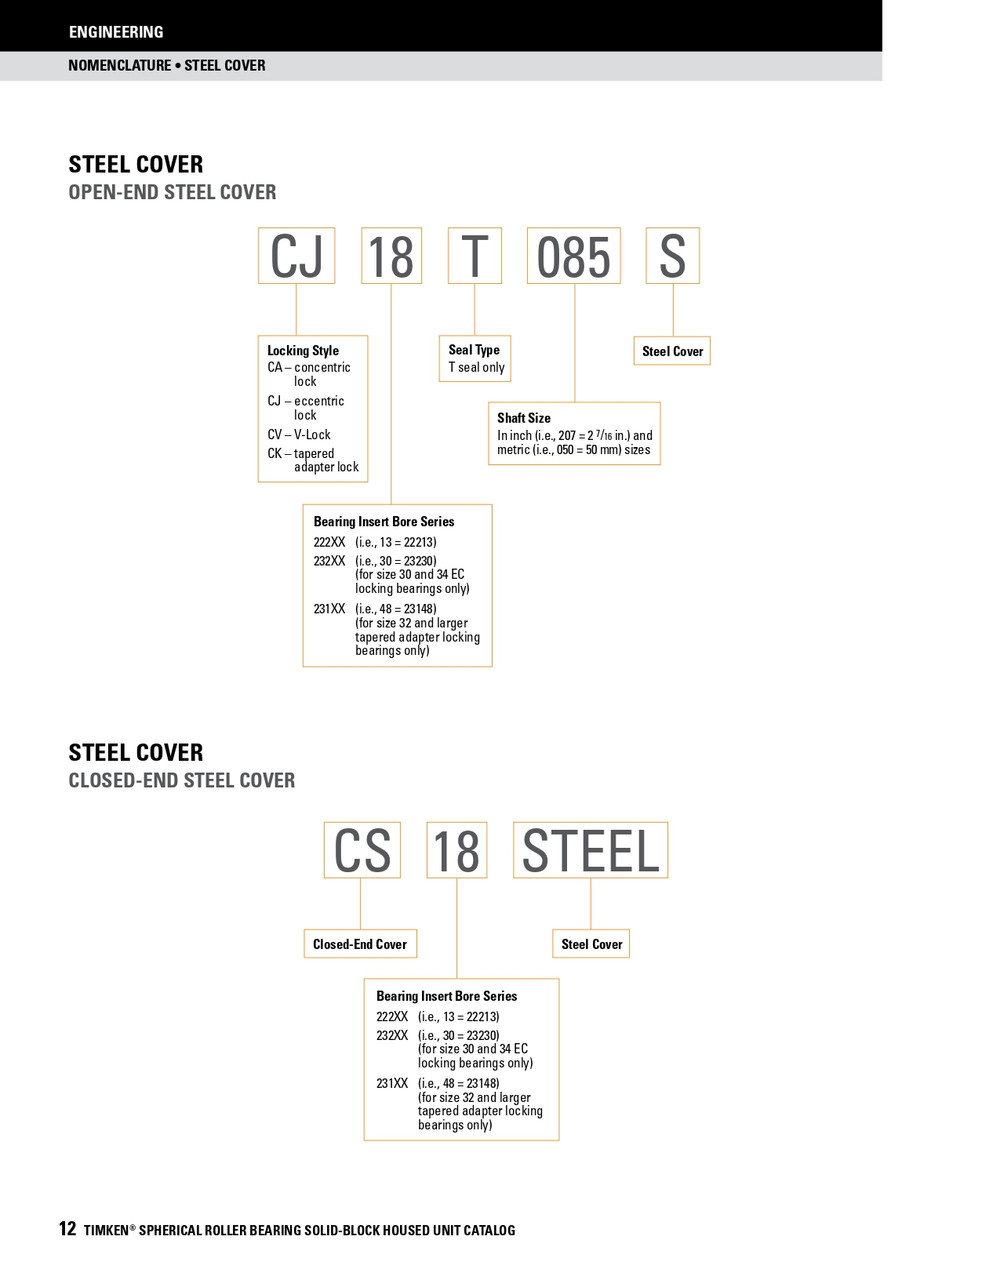 170mm Timken SRB Steel Open End Cover w/Teflon Seal - Timken Eccentric Lock Type  CJ34T170S